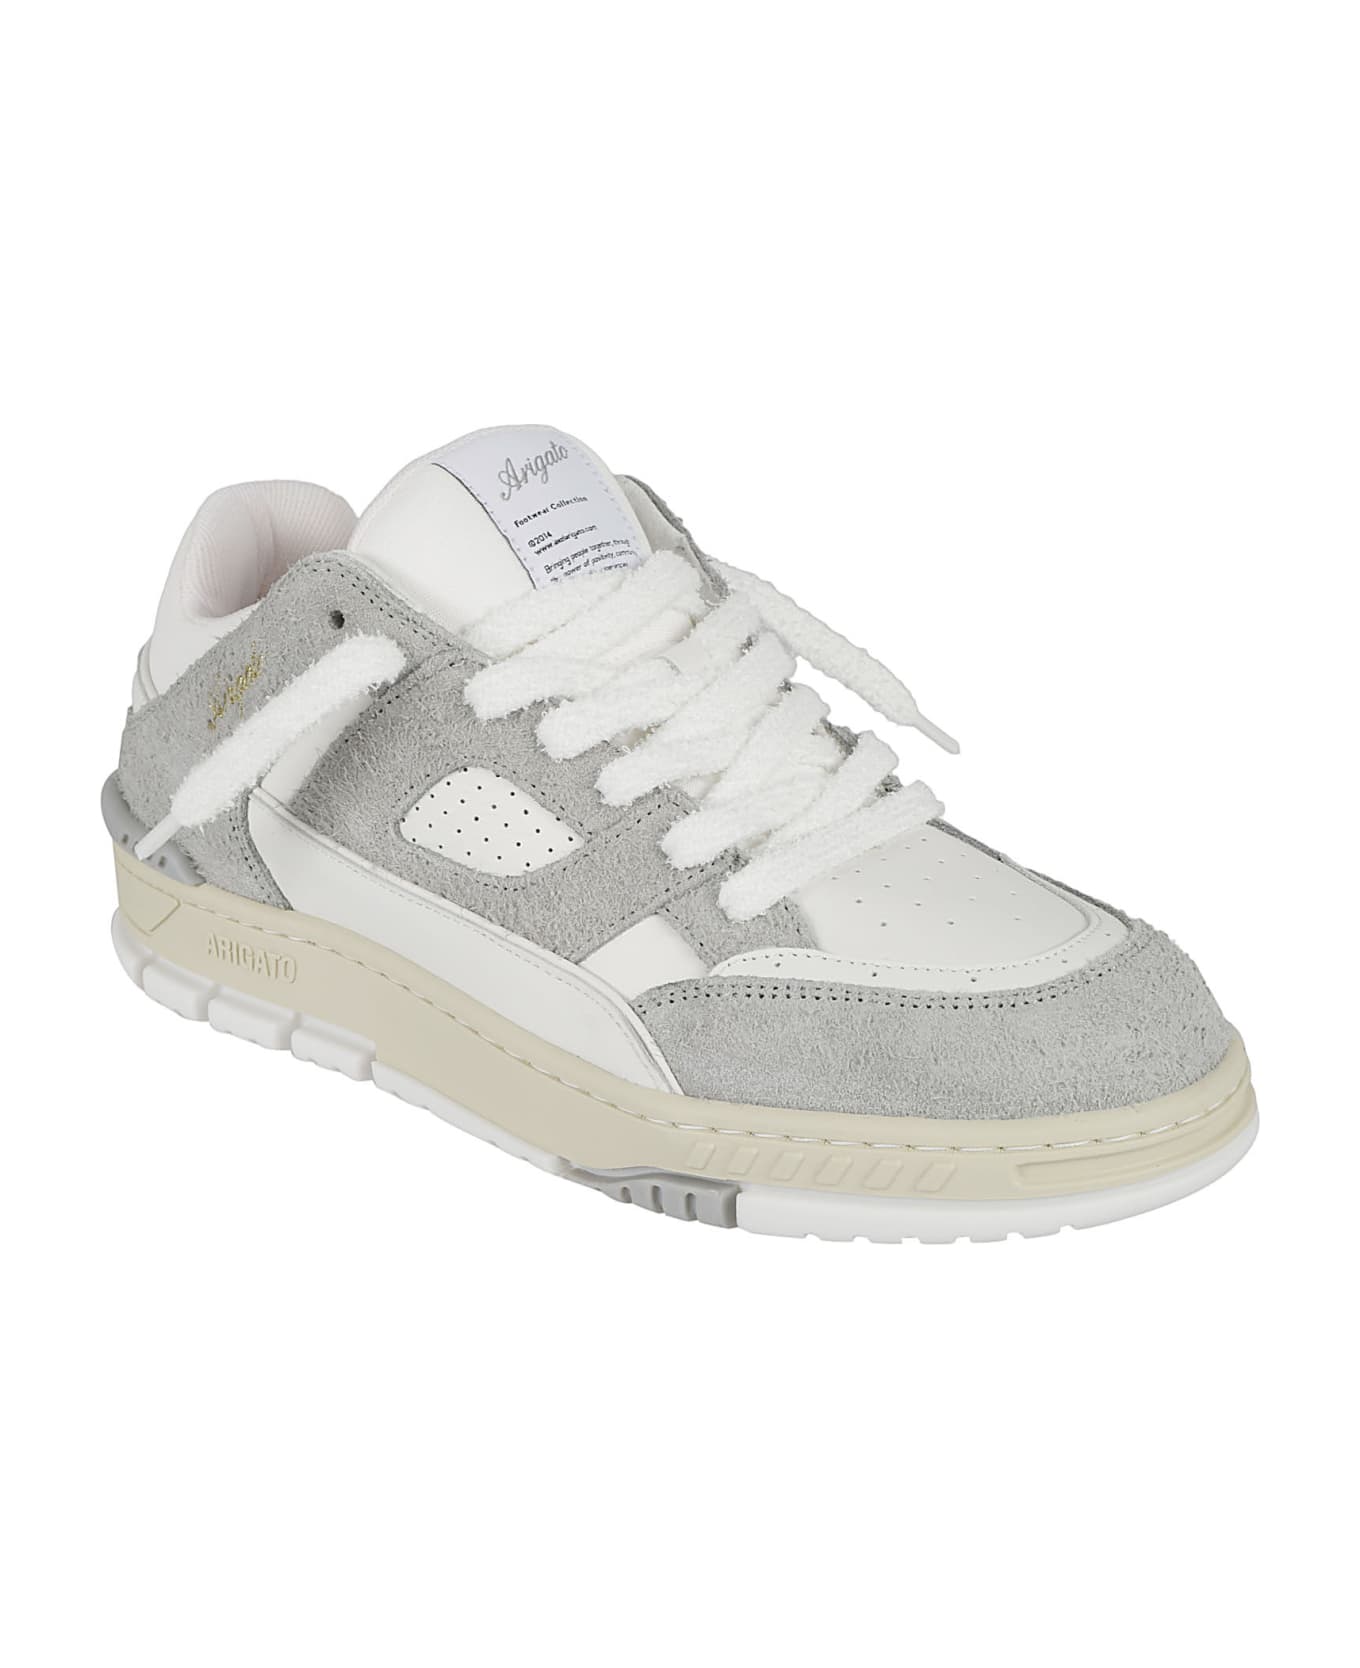 Axel Arigato Area Lo Sneakers - Grey/White